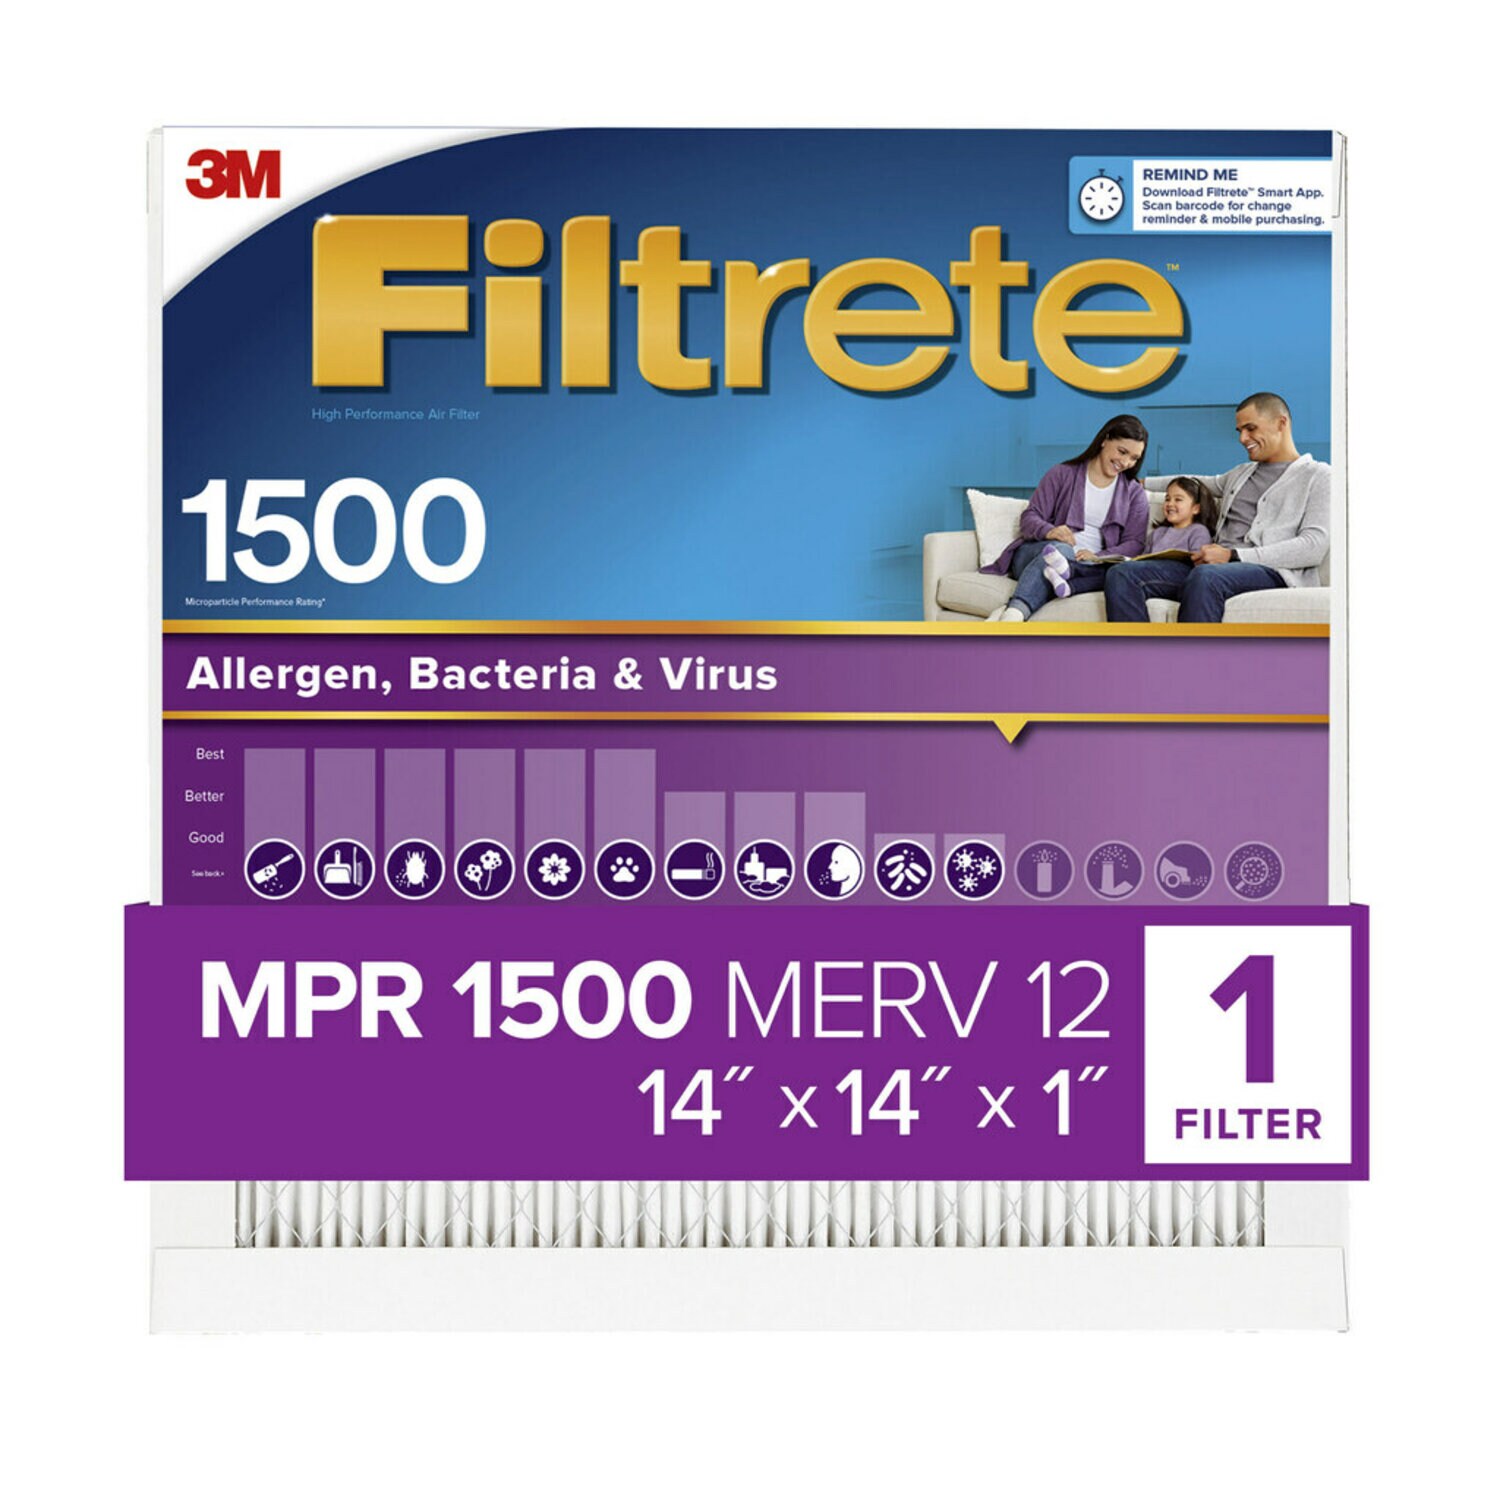 7100220150 - Filtrete High Performance Air Filter 1500 MPR UP11-4, 14 in x 14 in x 1 in (35.5 cm x 35.5 cm x 2.5 cm)